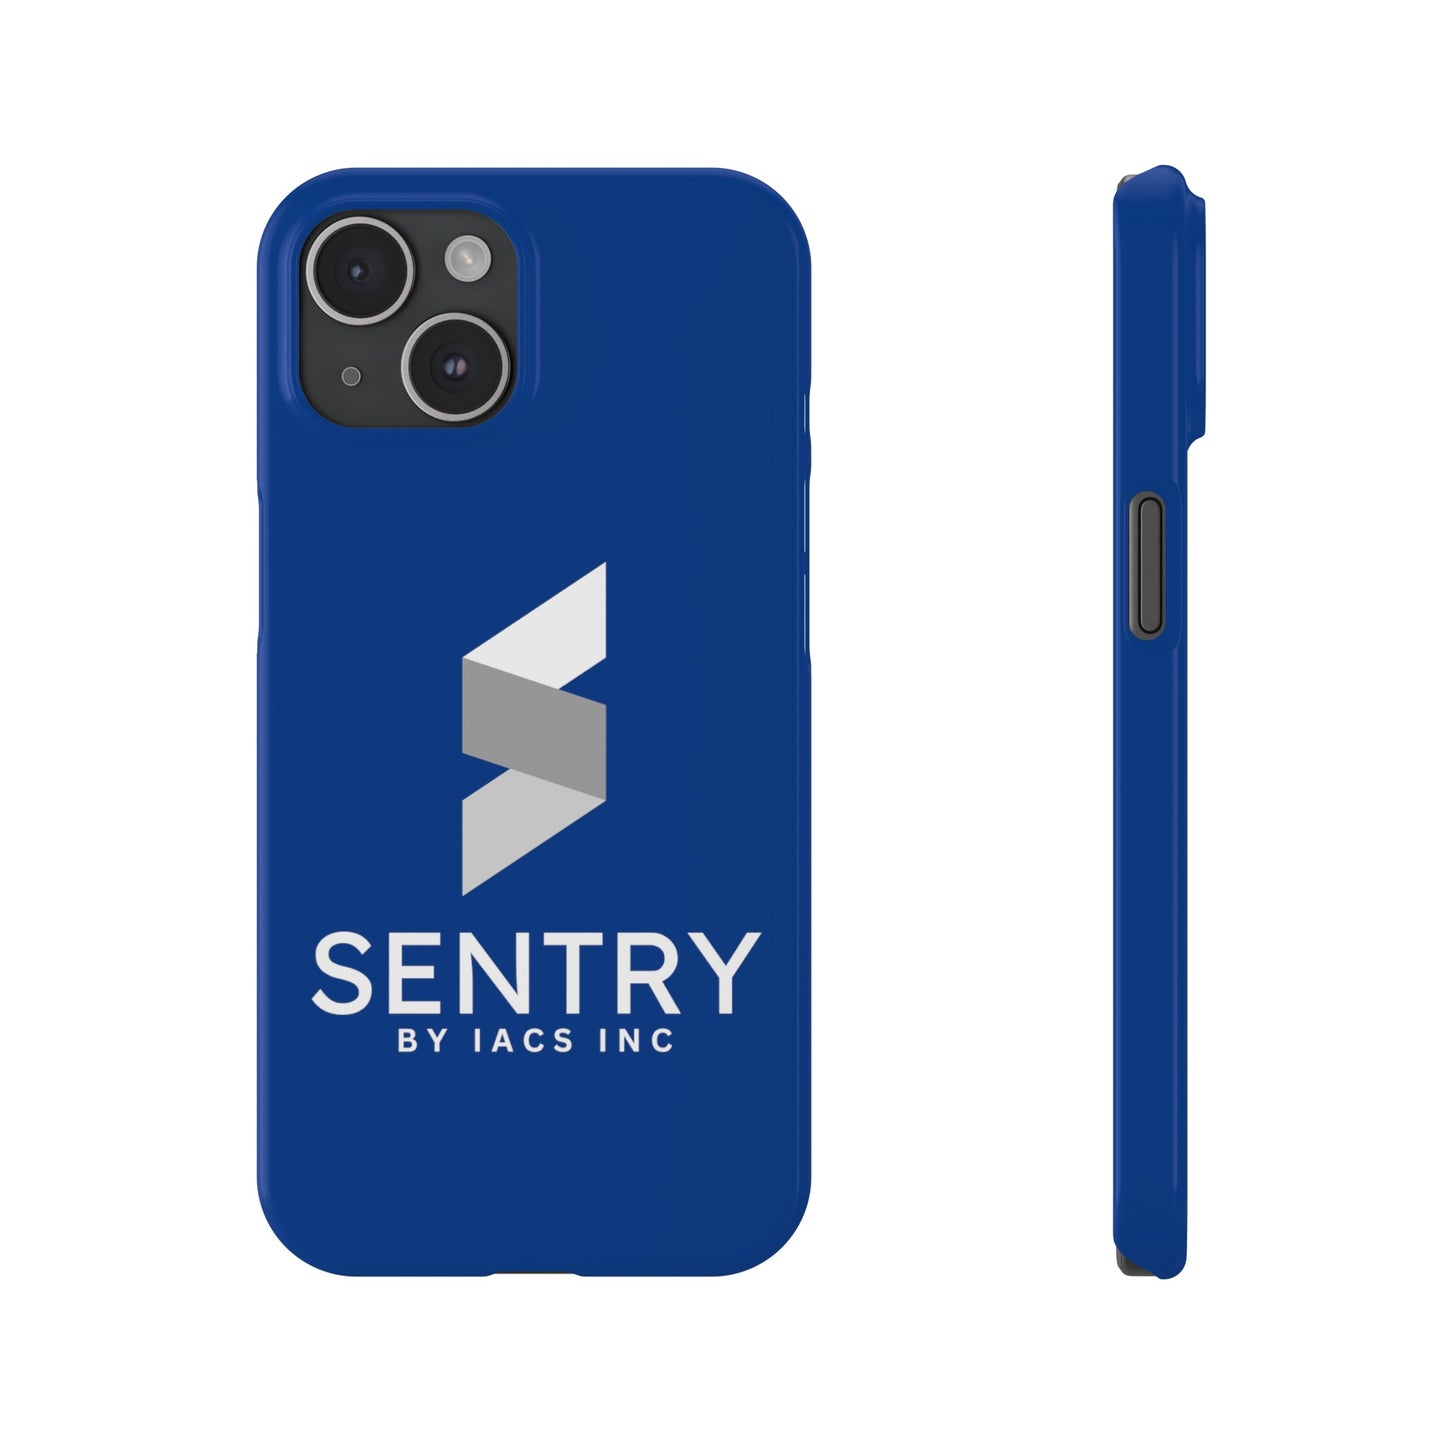 Sentry Slim Phone Cases